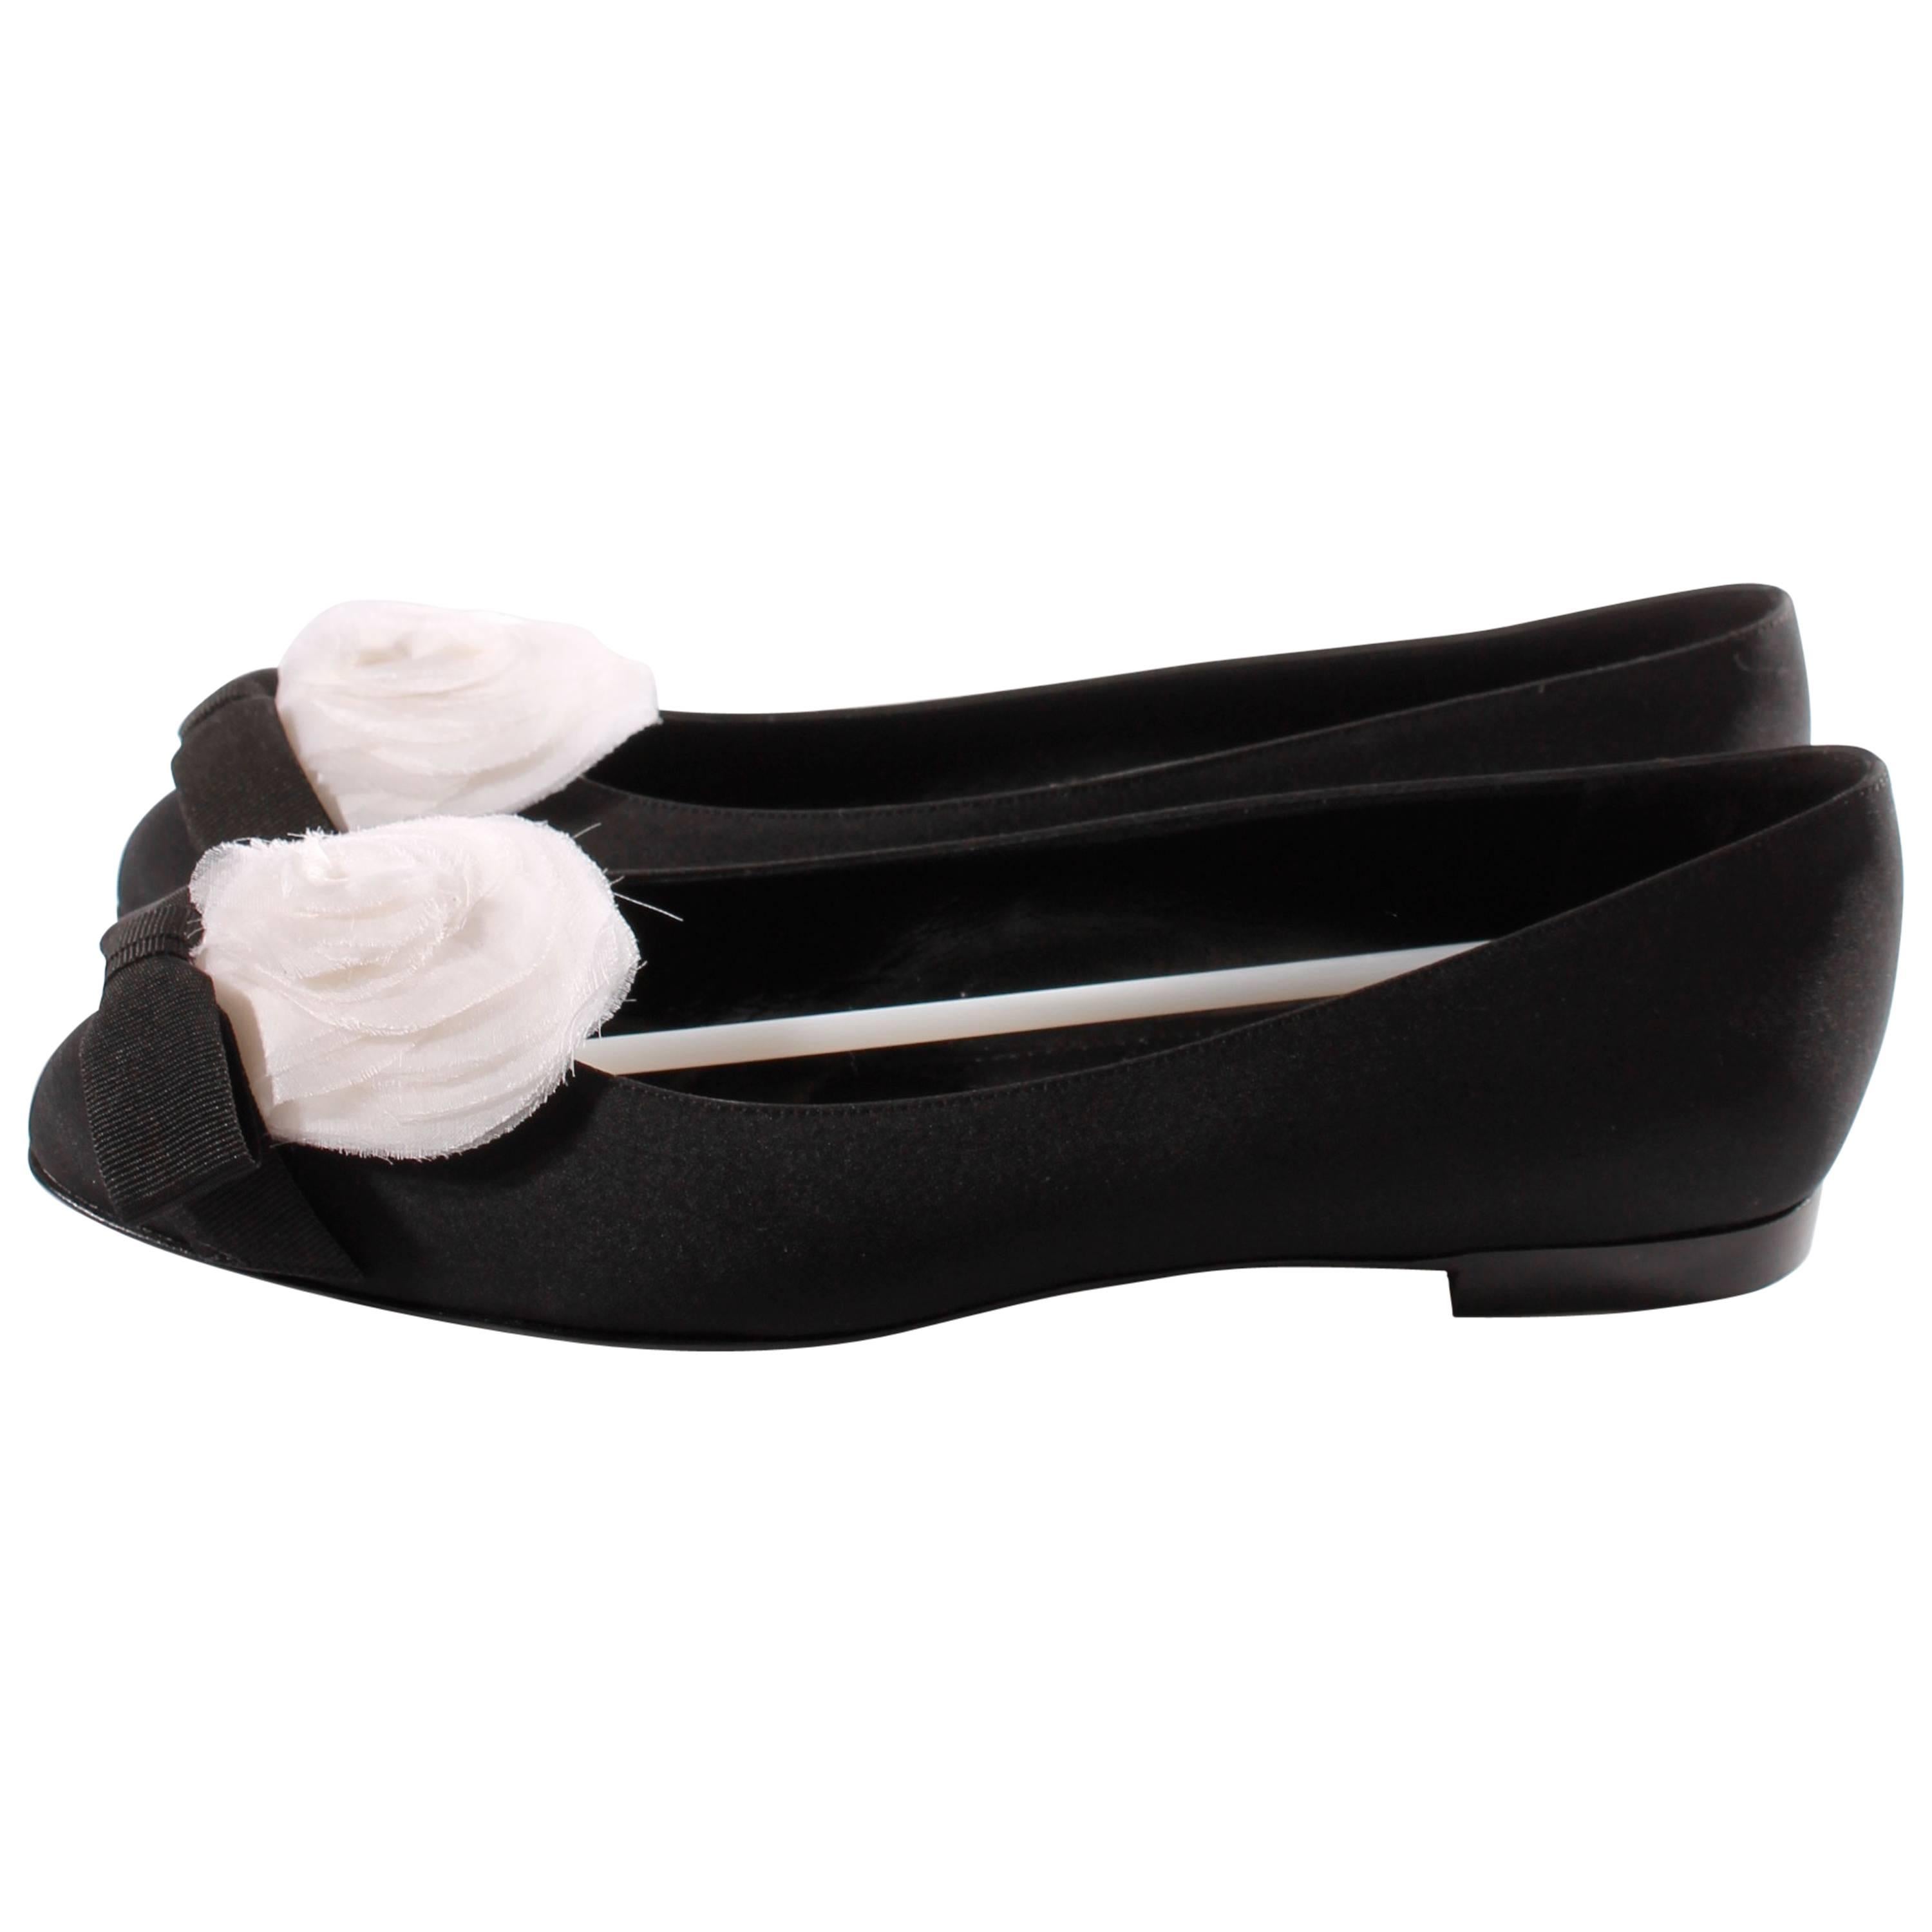 Chanel Satin Camellia Flats - black/white